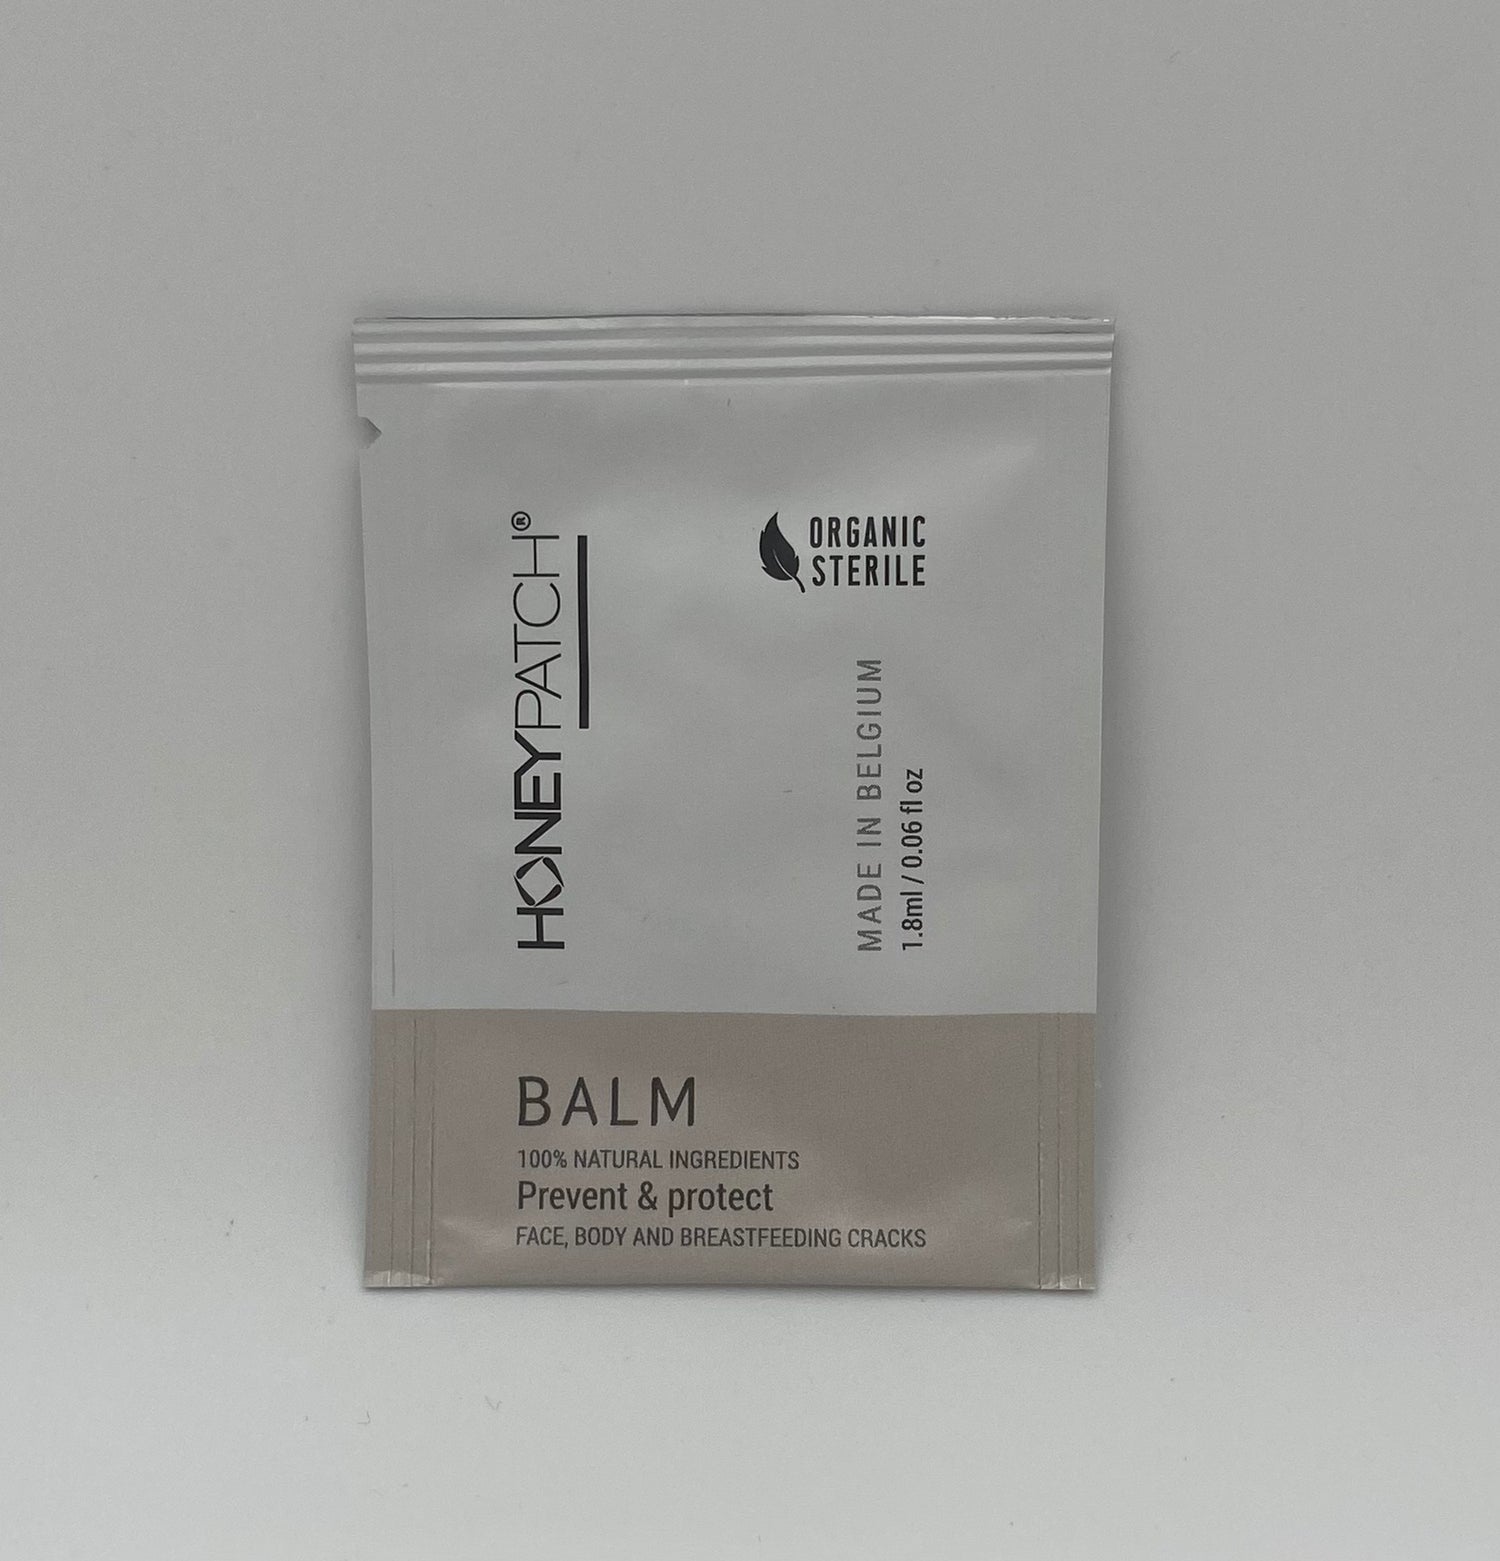 Unit dose of BALM (2ml) Medical wax balm